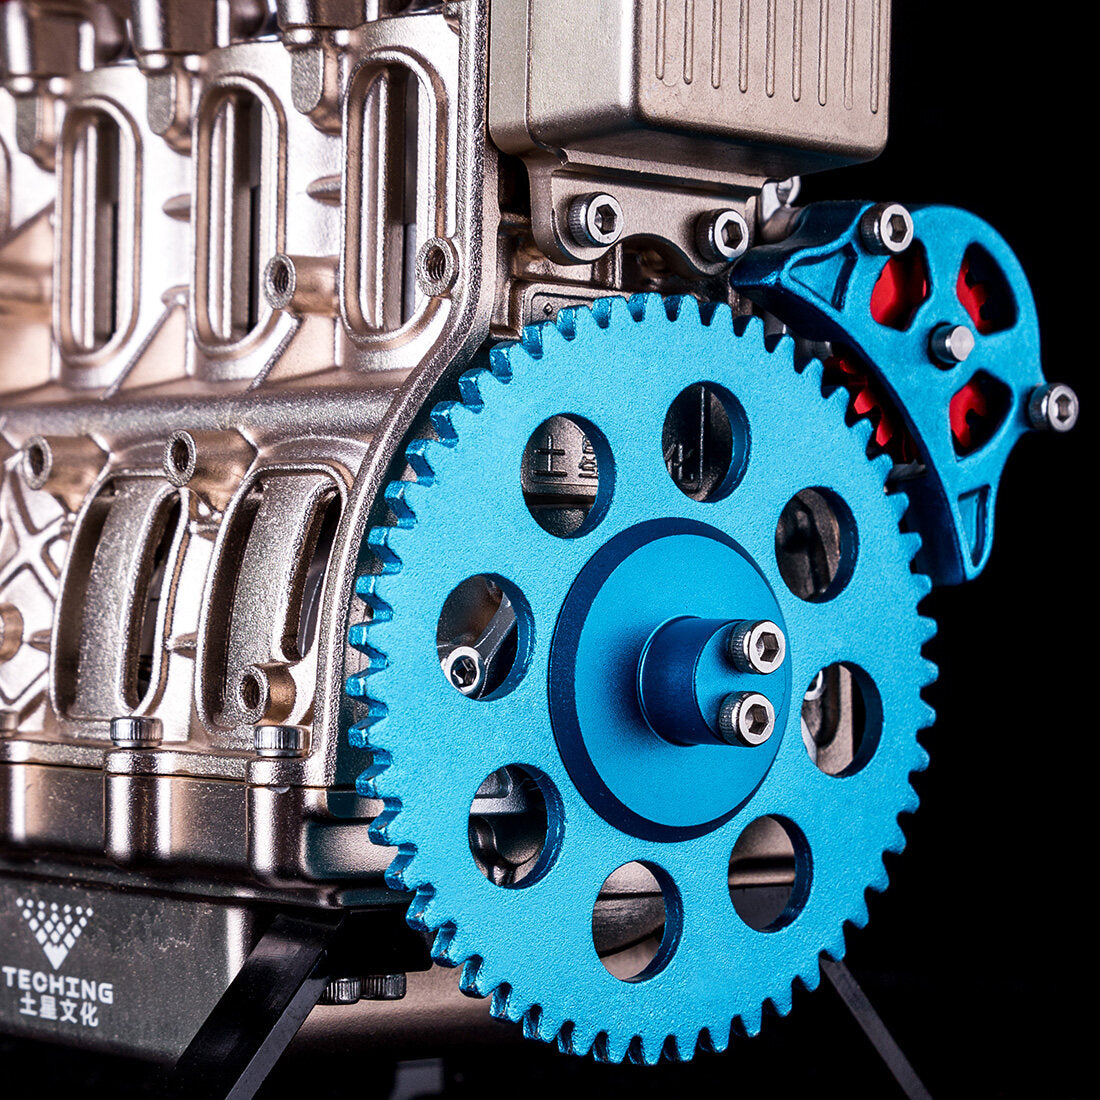 TECHING L4 Motor Modellbausatz, Der Funktioniert - 364 Teile 4